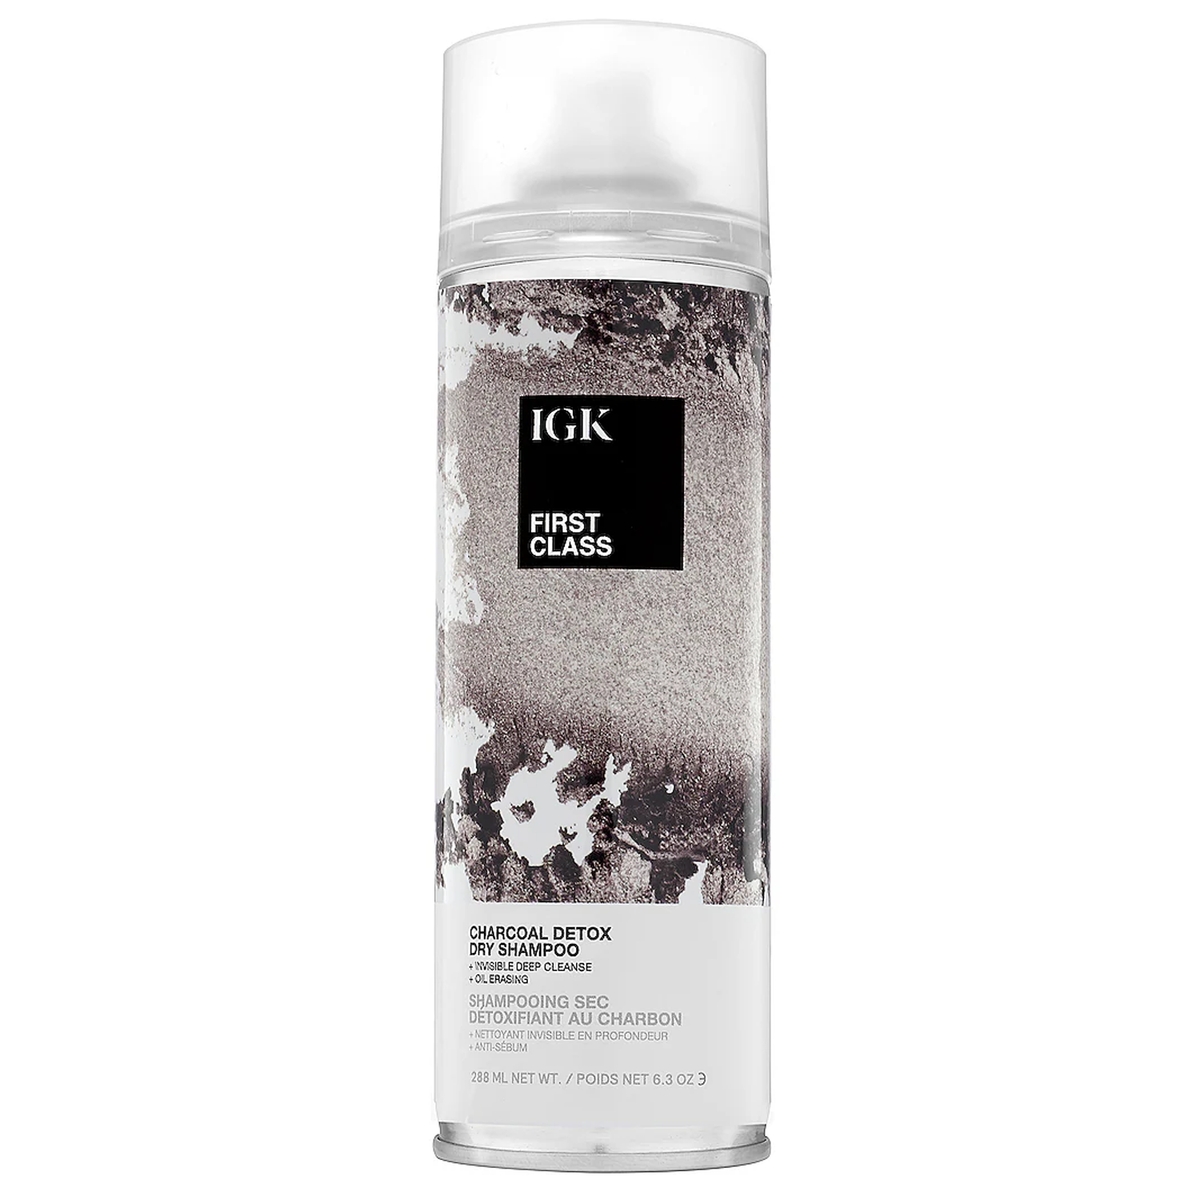 IGK Hair First Class - Charcoal Detox Dry Shampoo, 288 ml / 6.3 oz